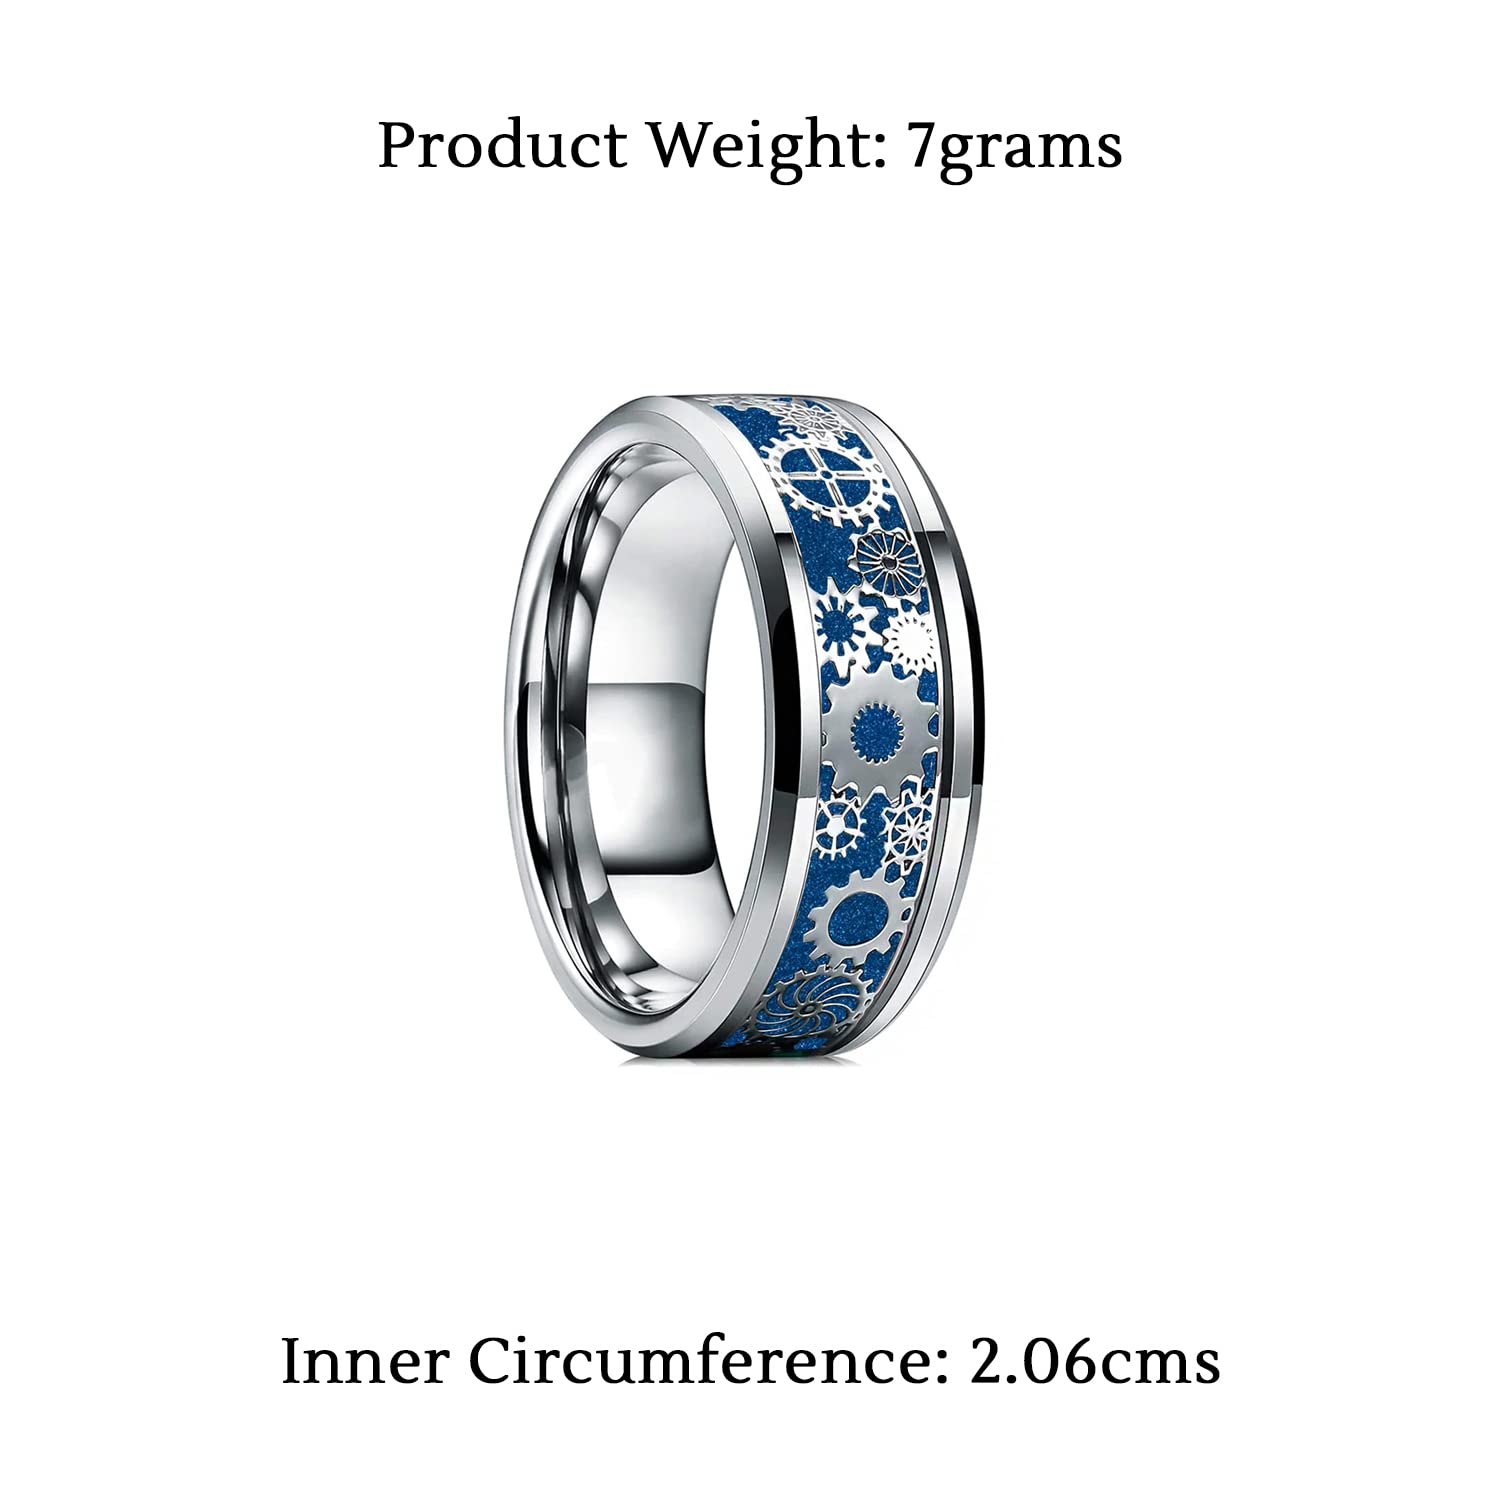 👌👌Latest gold stone ring designs for men👌👌 - YouTube